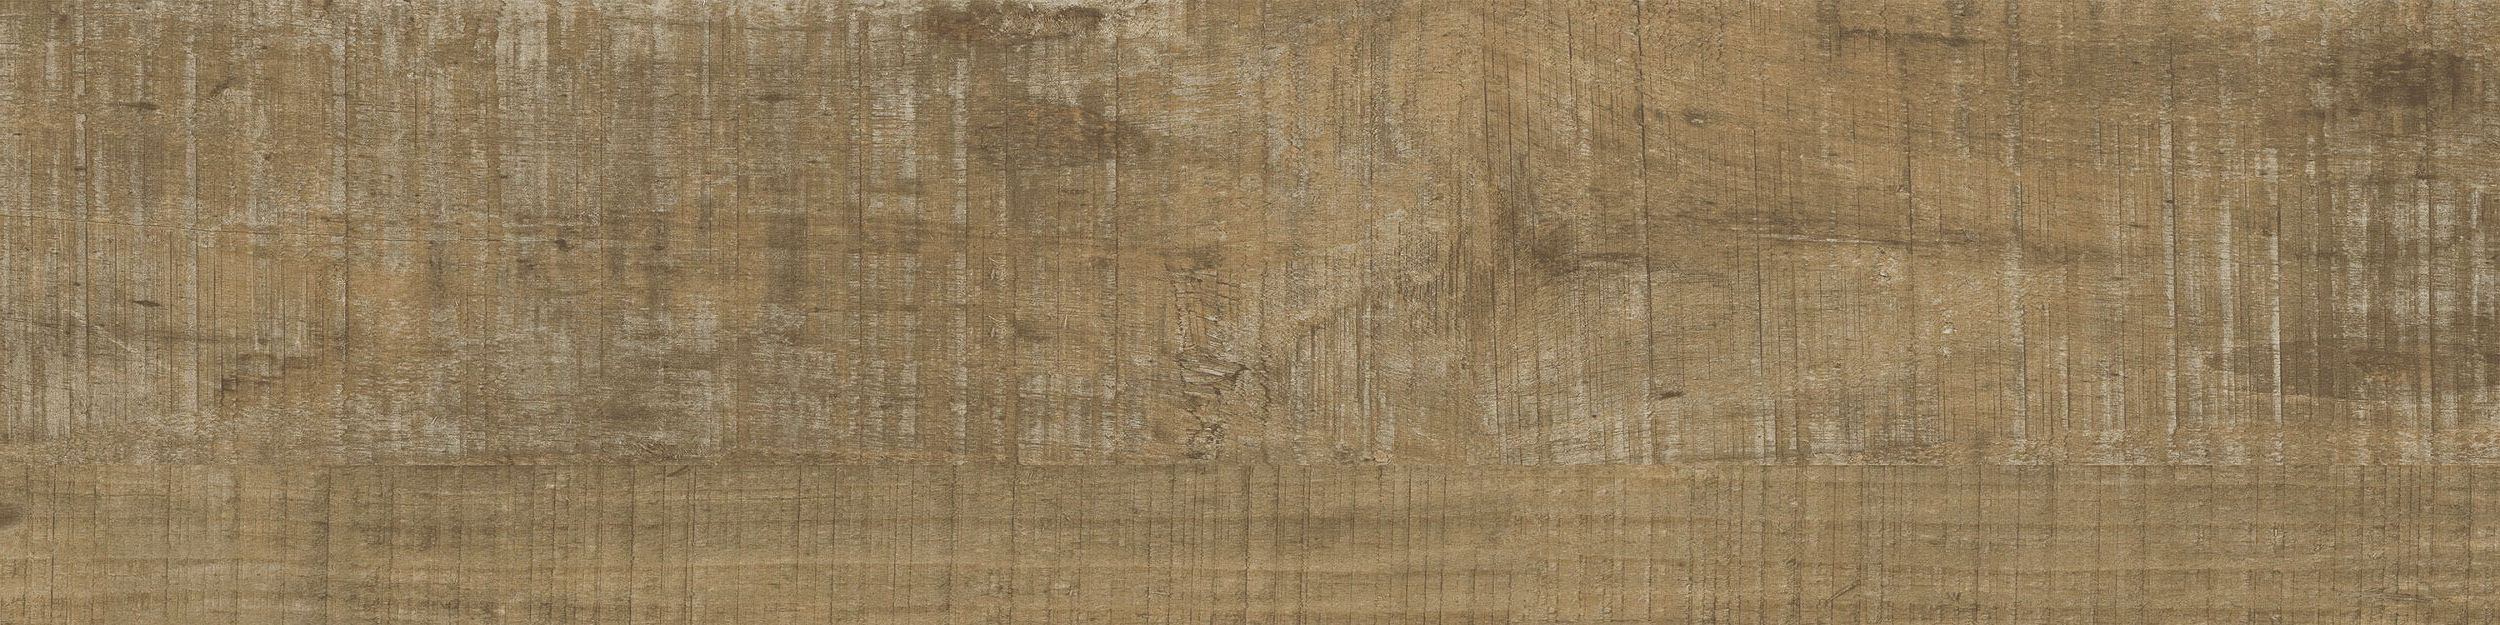 Textured Woodgrains LVT In Distressed Hickory imagen número 1